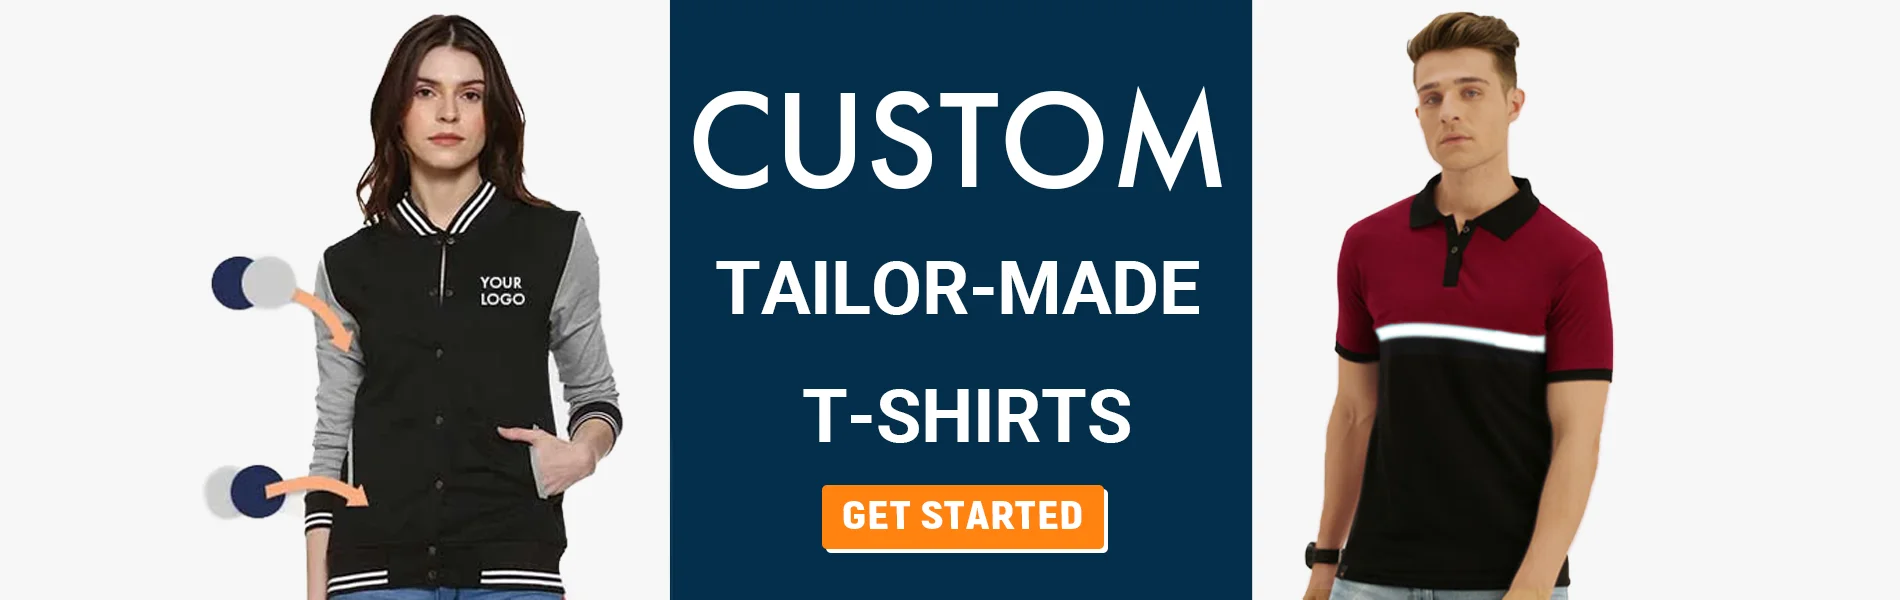 custom tailormade t-shirts gandhinagar